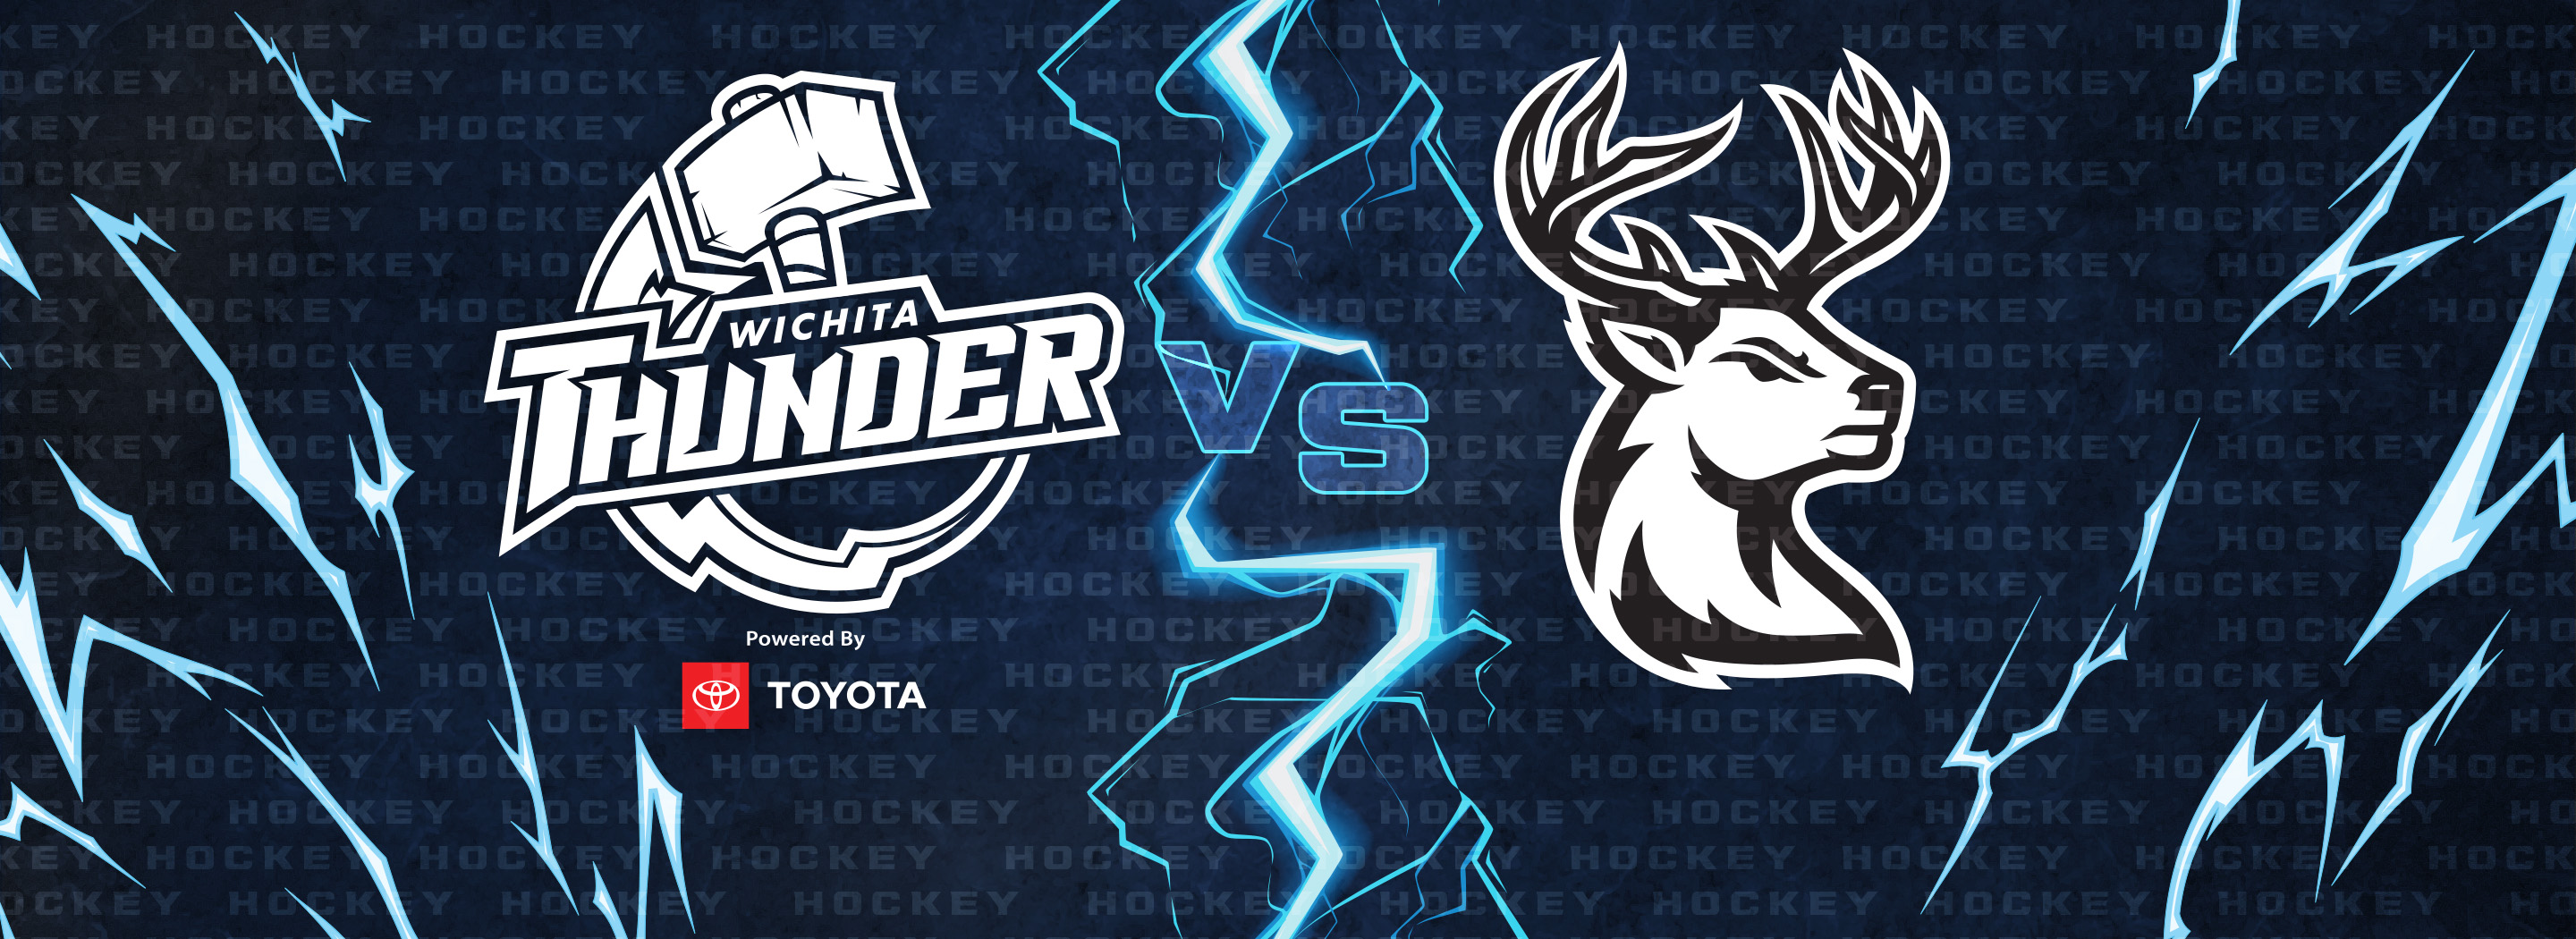 Thunder vs Iowa at INTRUST Bank Arena - MAR 8